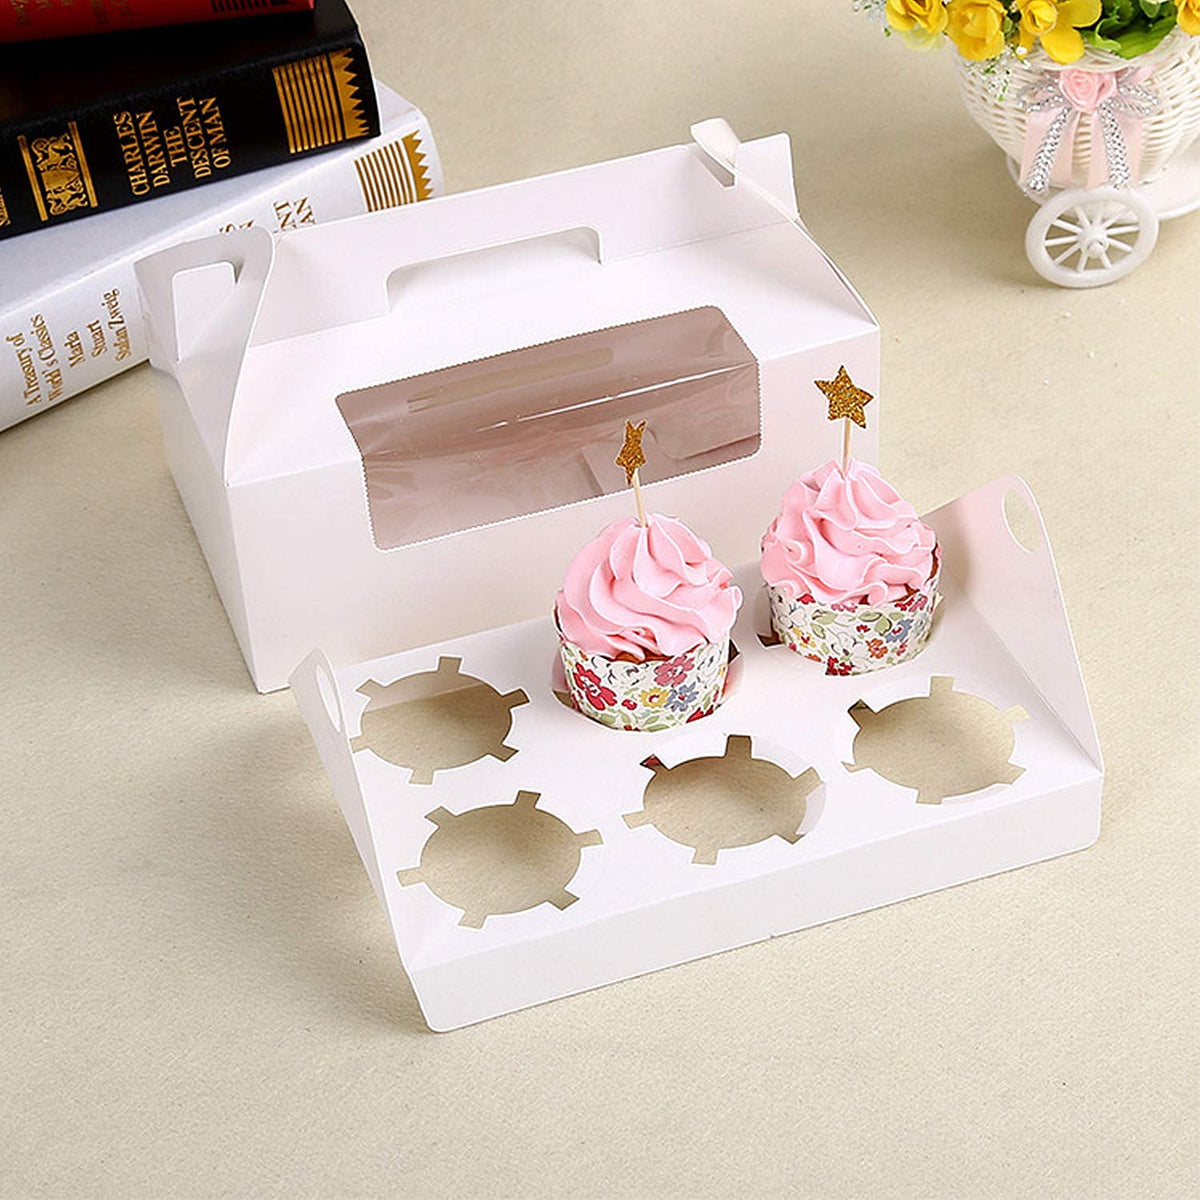 Cupcake Box, weiss , 6 Cupcakes